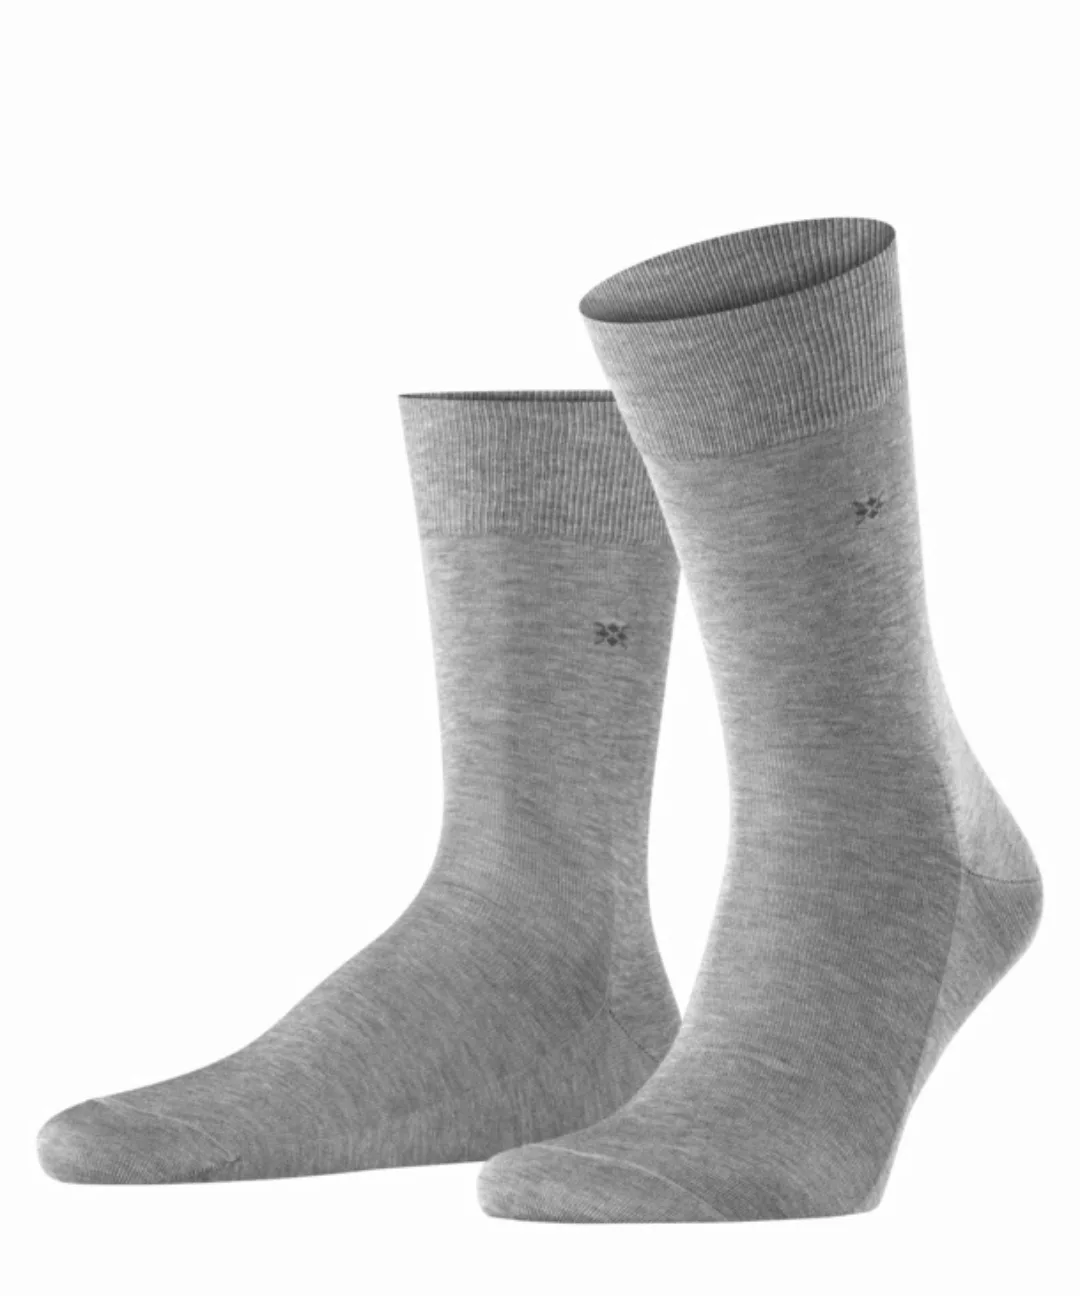 Burlington Cardiff Herren Socken, 40-46, Blau, Uni, Baumwolle, 21036-612002 günstig online kaufen